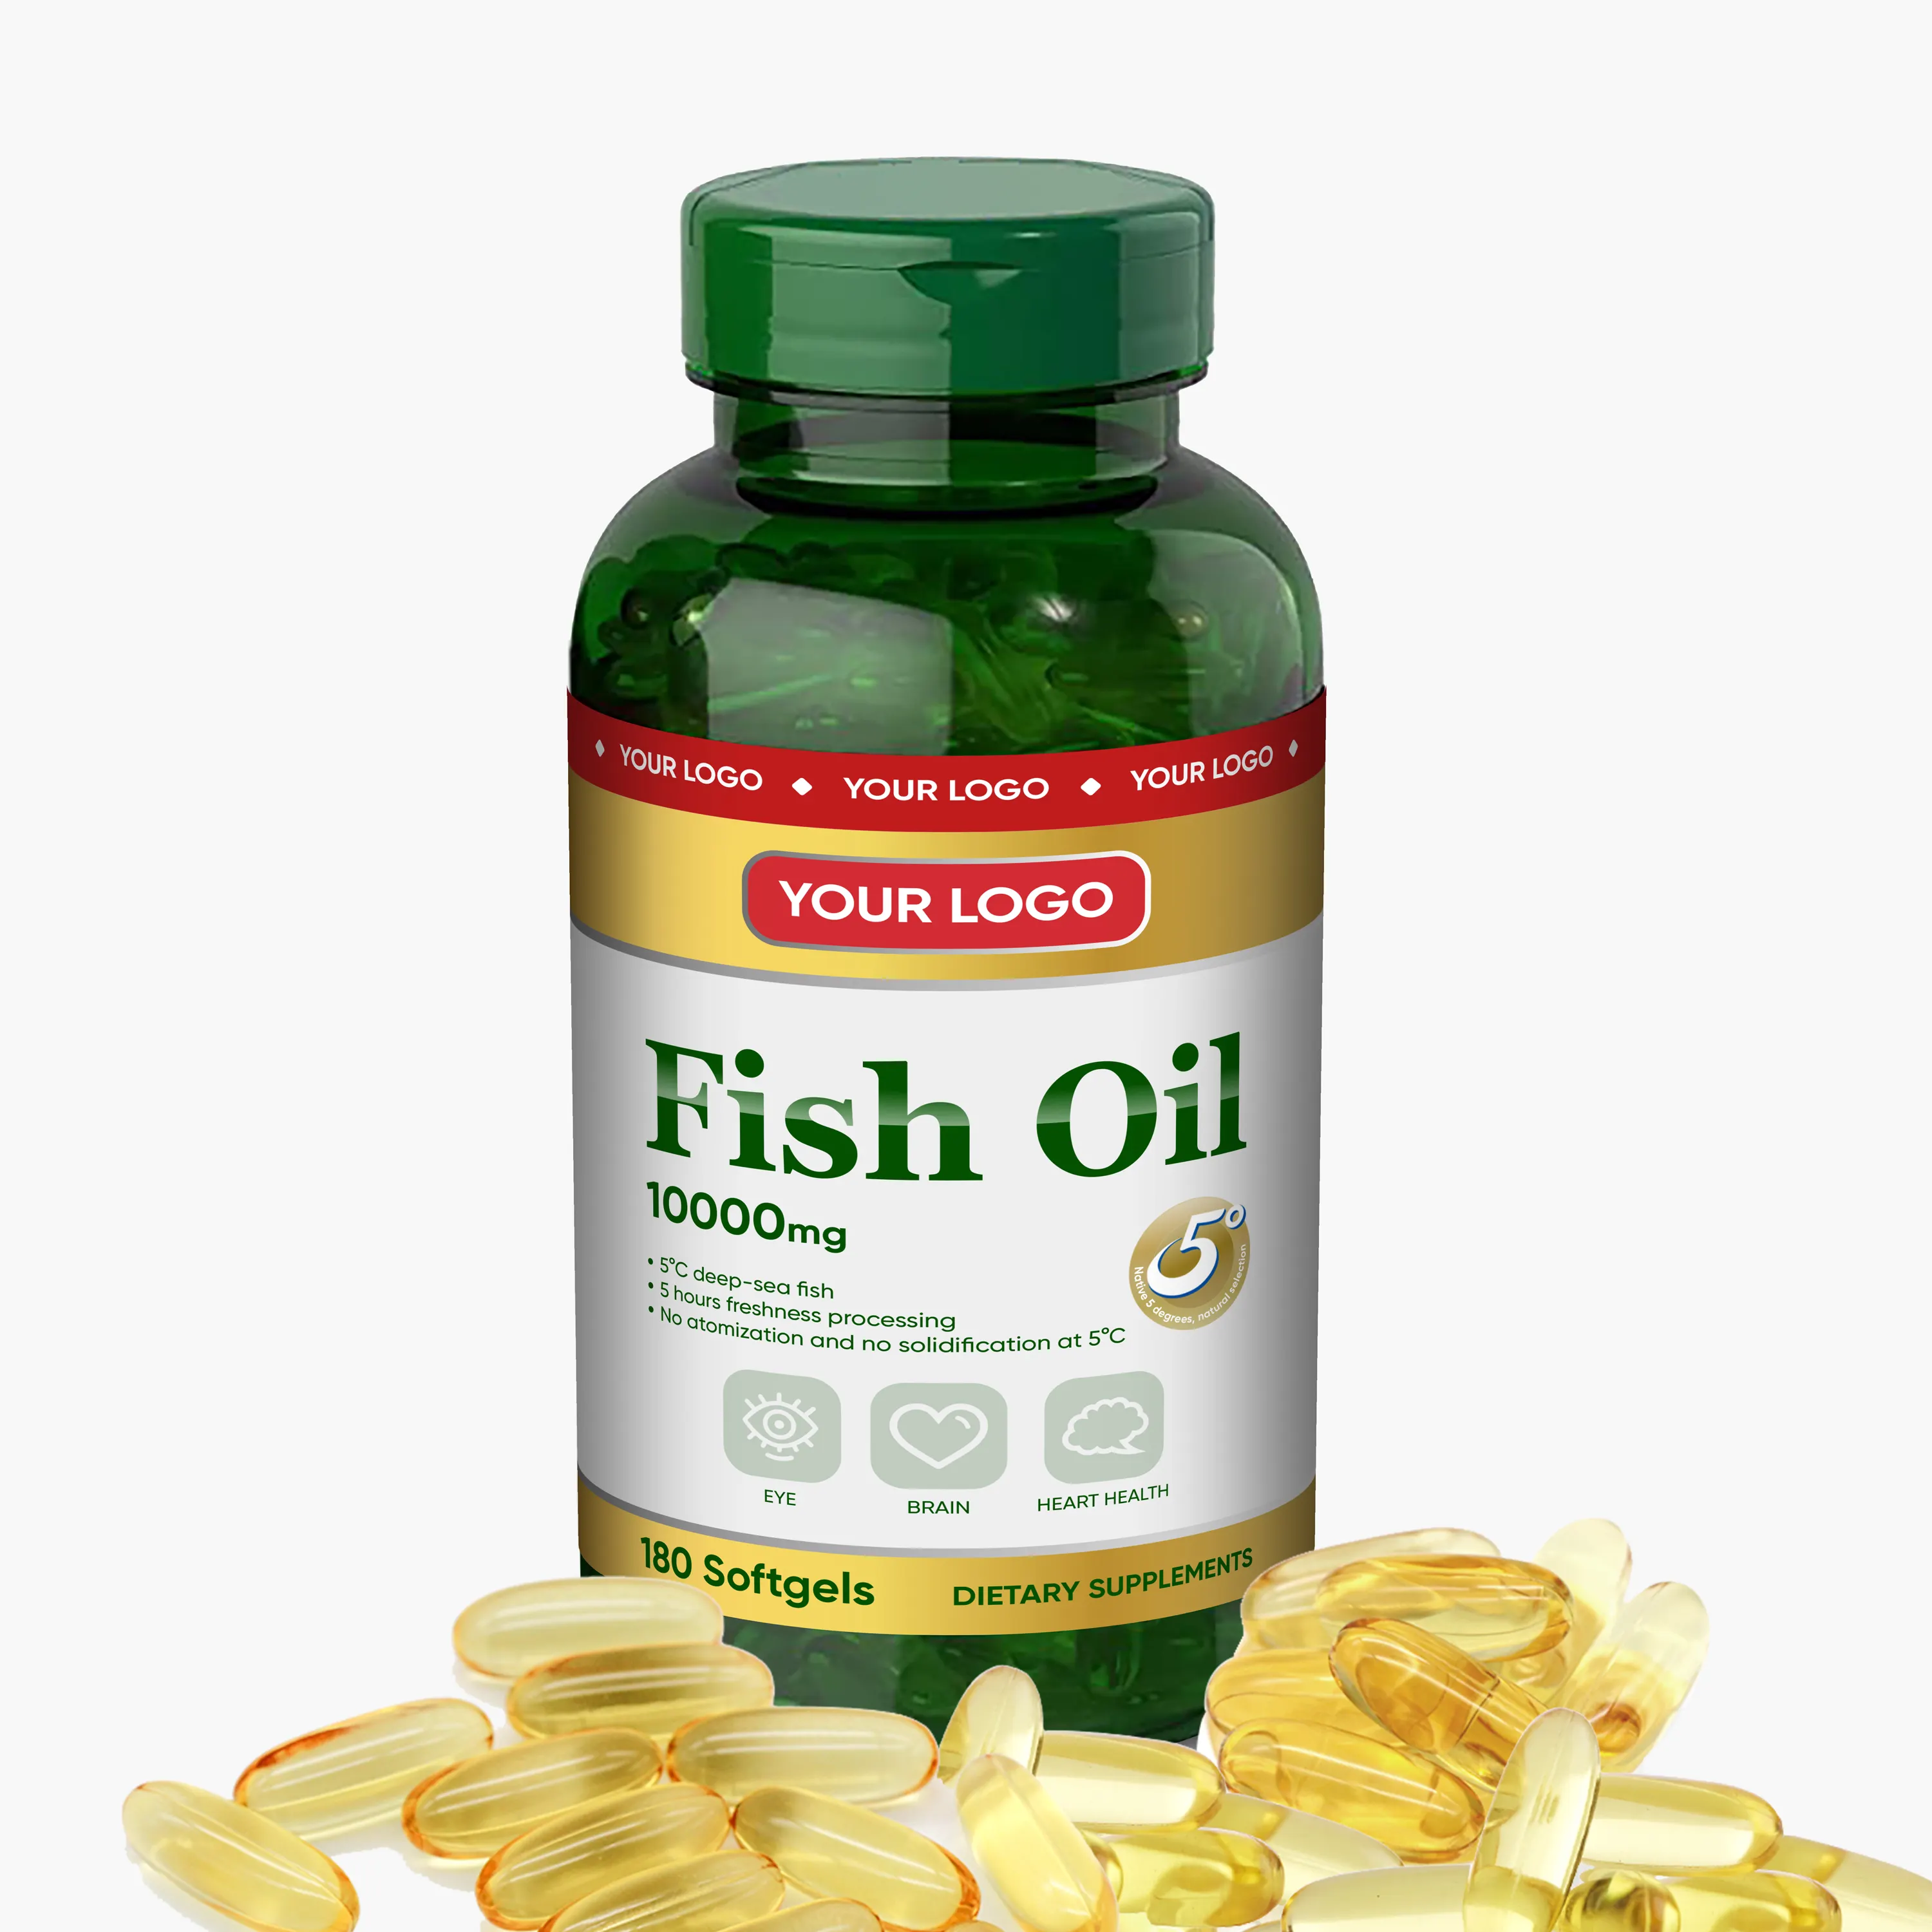 Hot Sale fish oil Omega 3 Fish Oil Softgel capsule Supplements Fish Oil 1000mg Dha 12 Epa 18 Soft Capsules